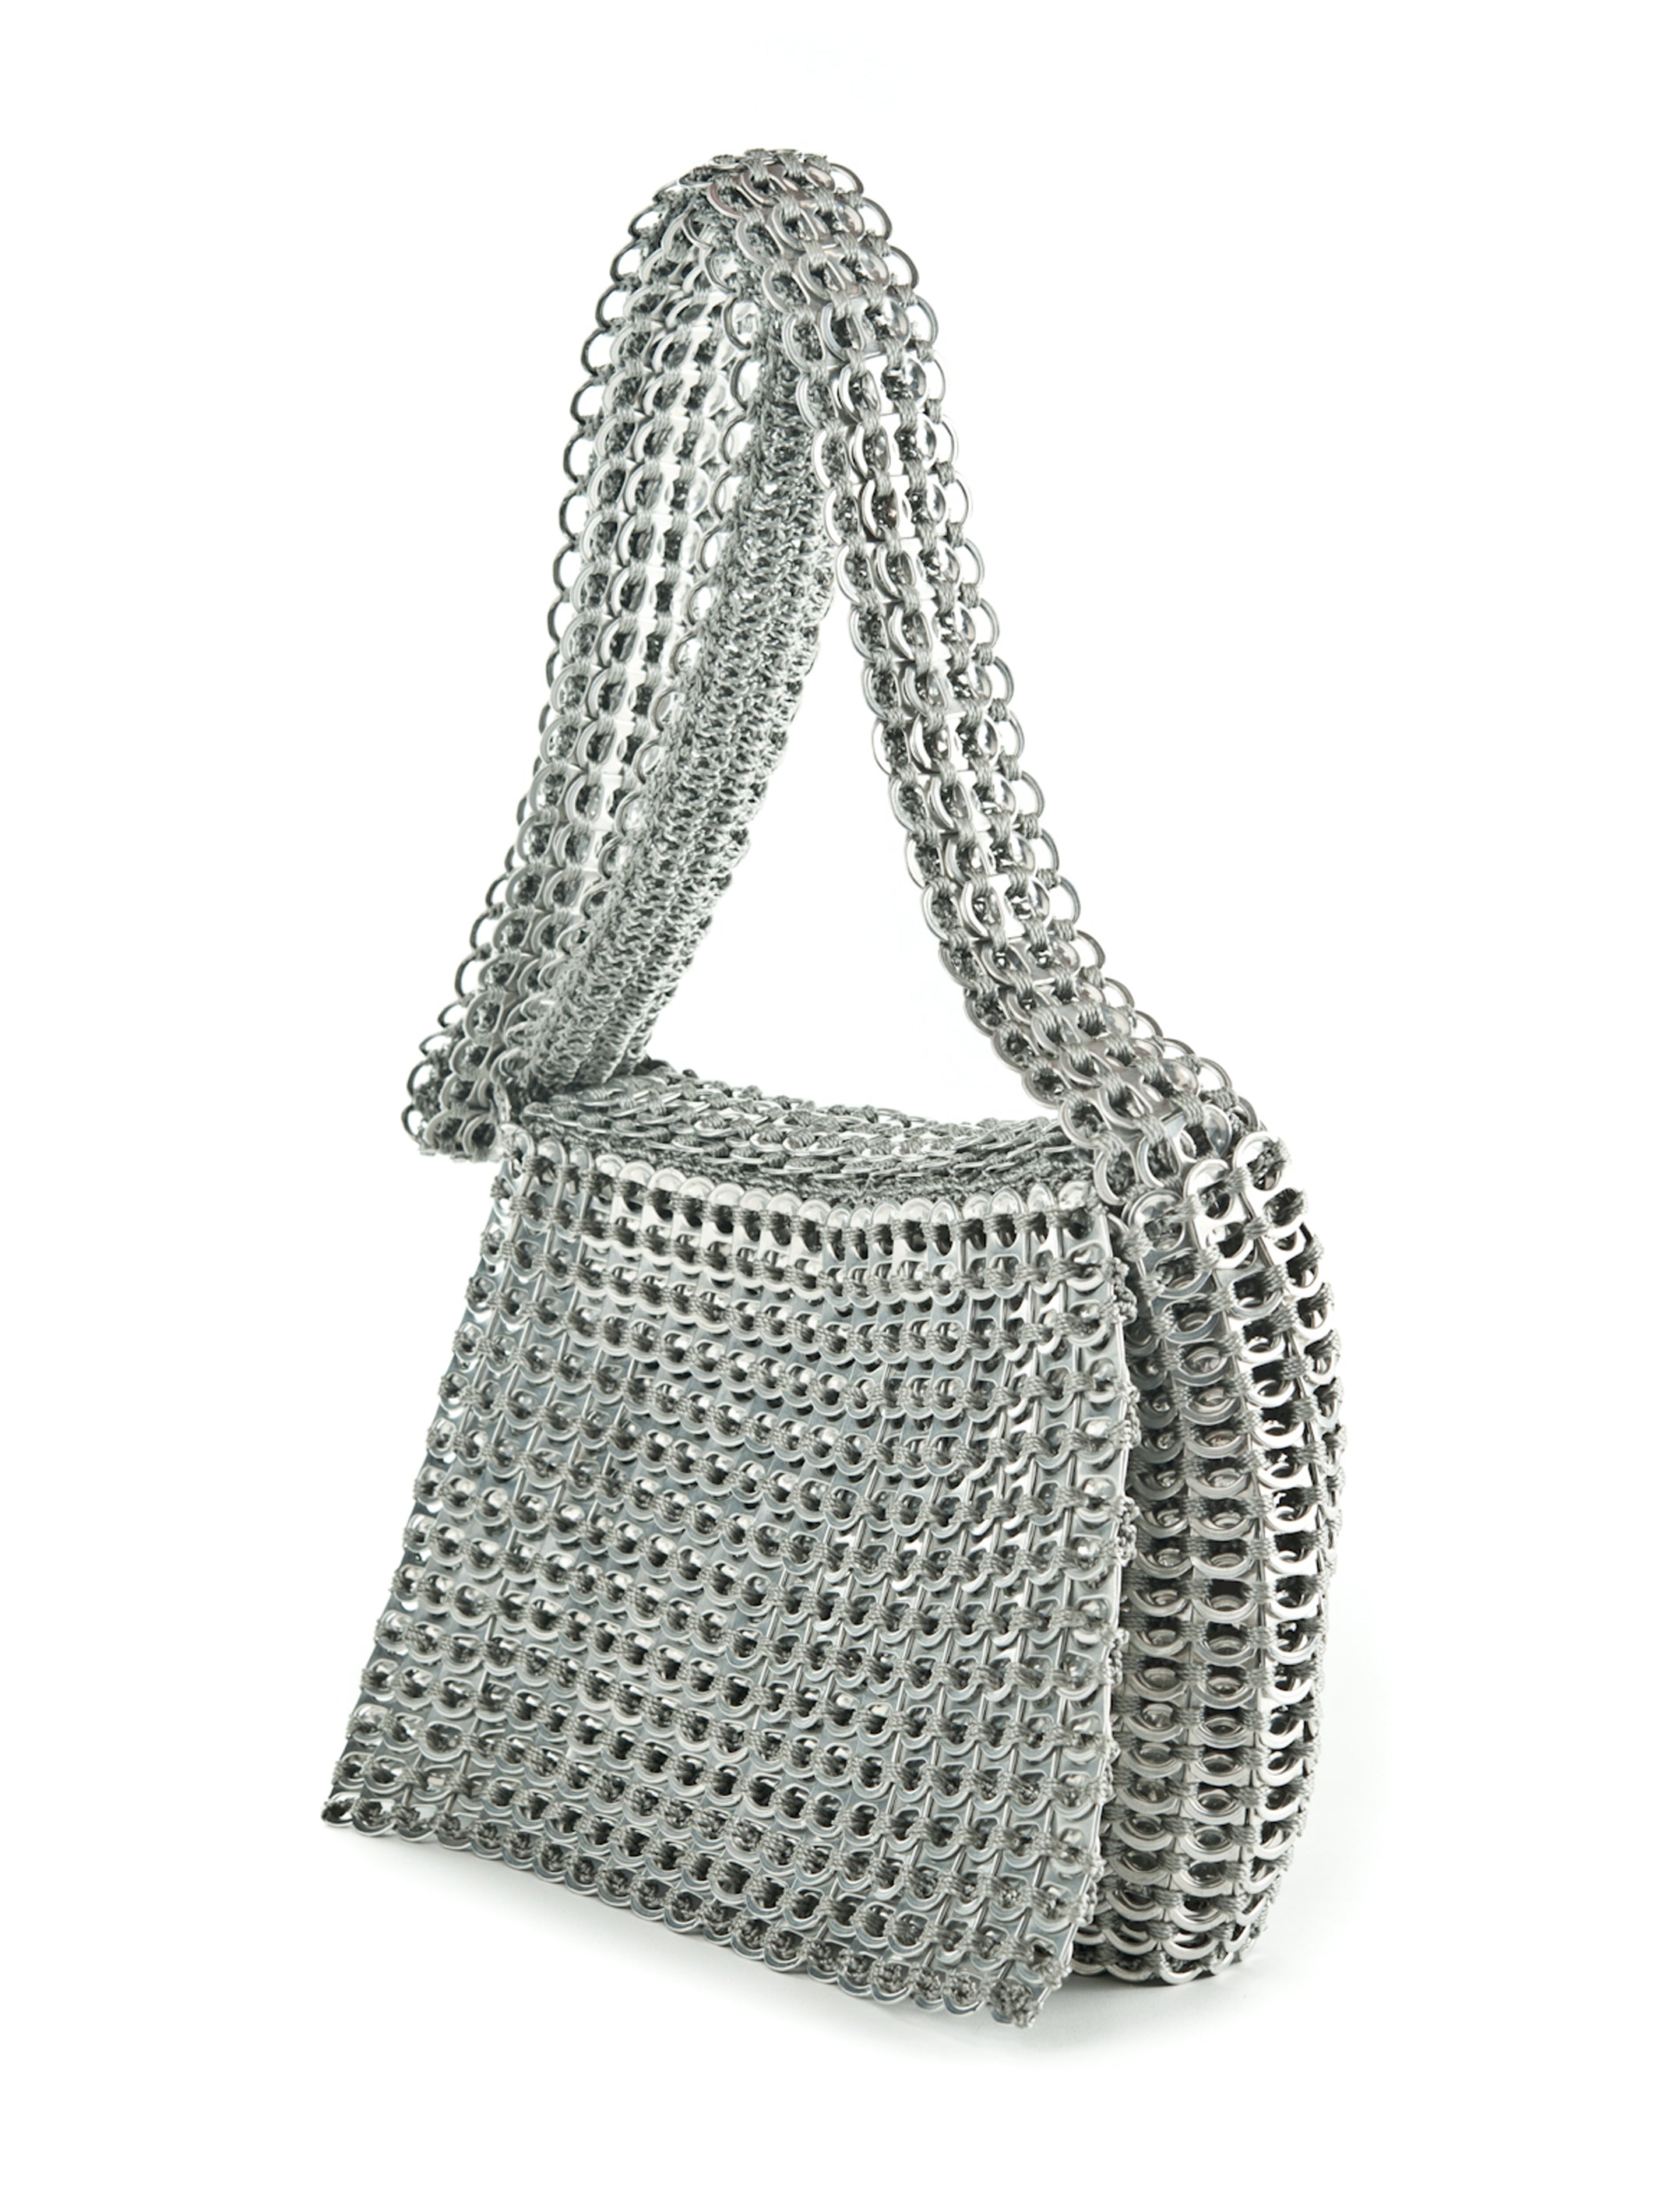 Socorro Handmade Recycled Bag Silver Escama Studio